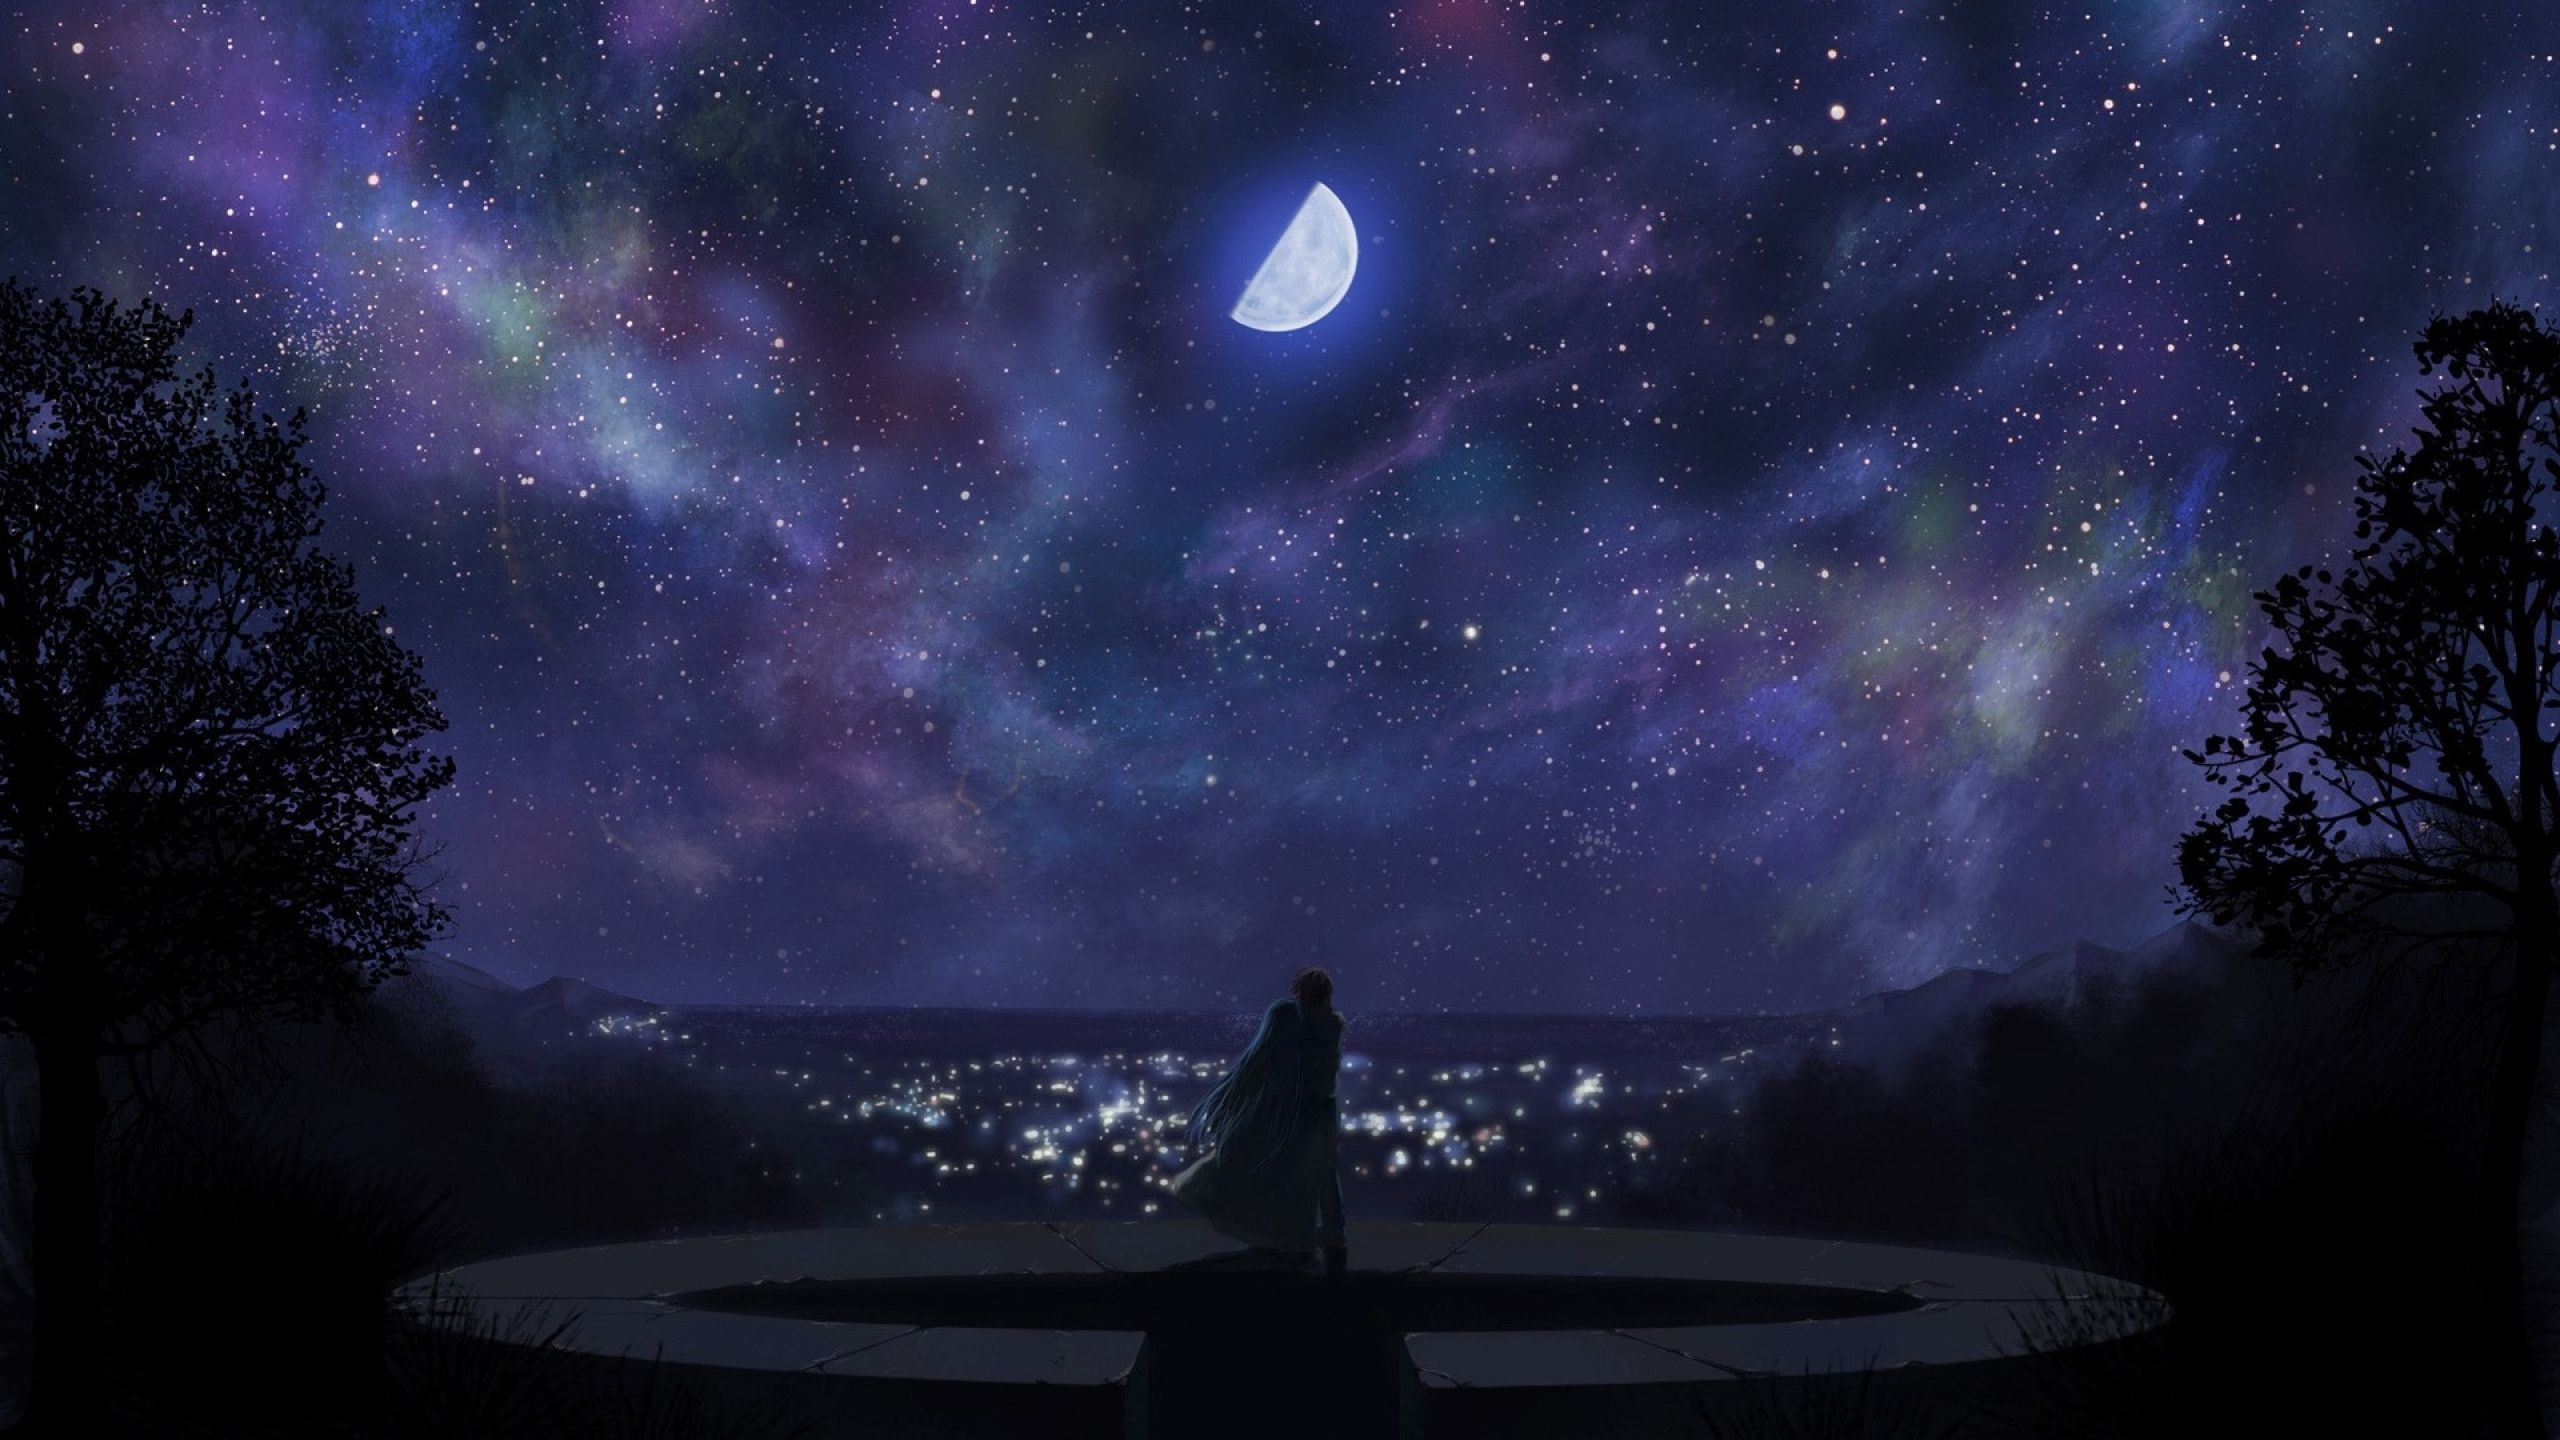 Your Name Anime Landscape Wallpapers - Top Những Hình Ảnh Đẹp